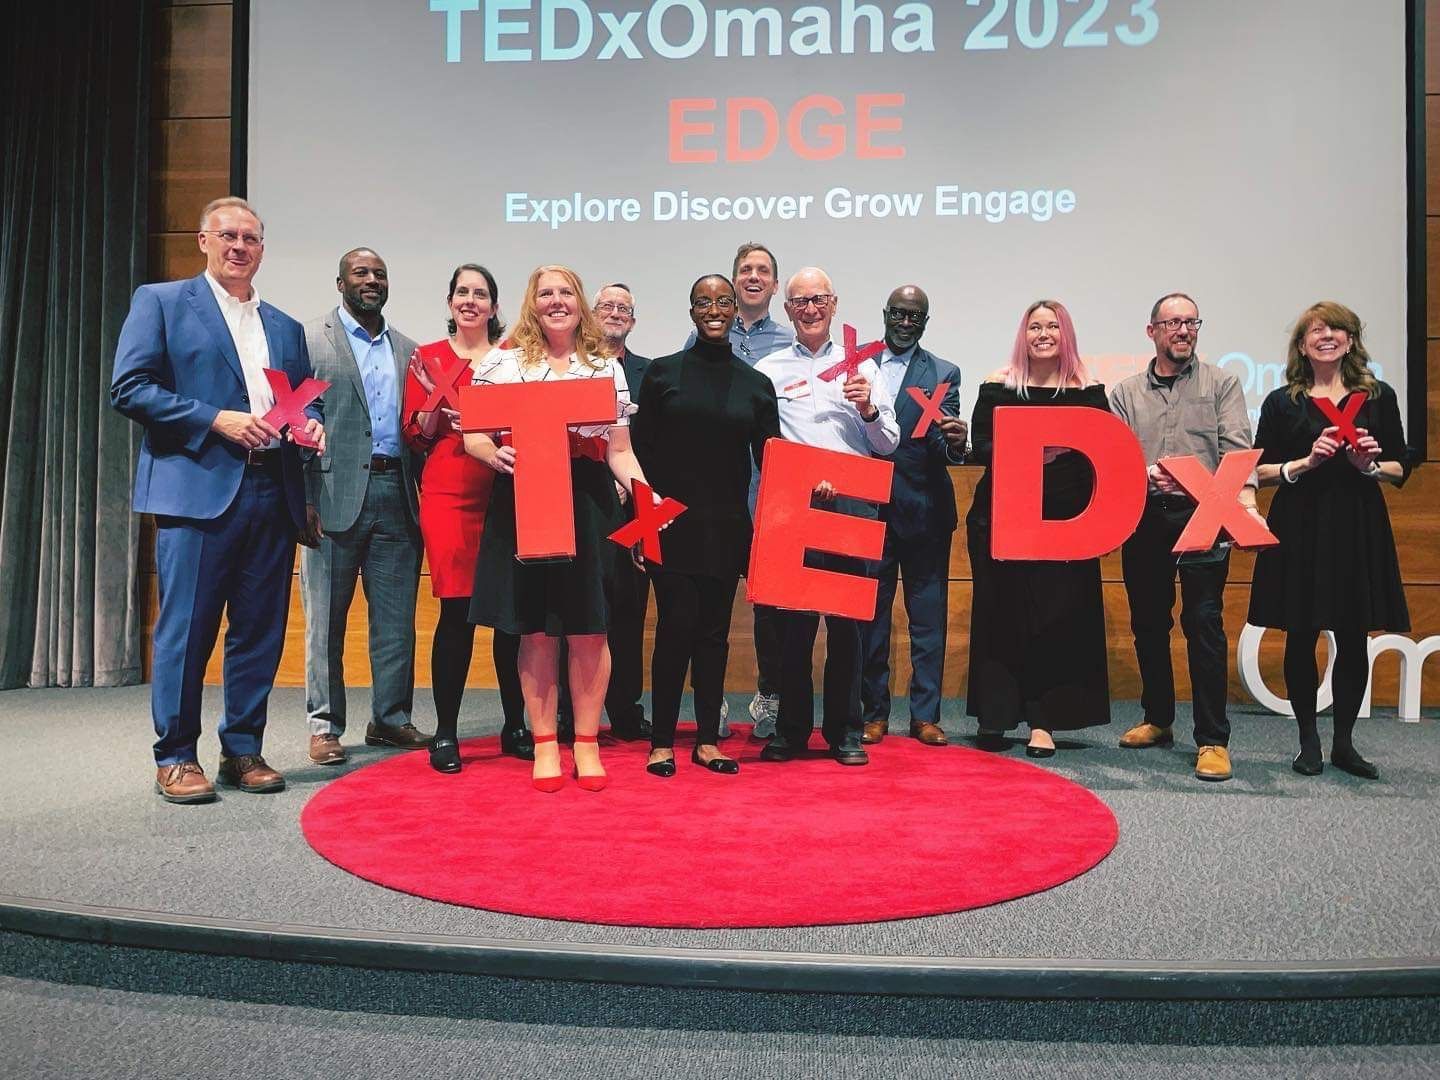 TEDx Omaha 2023 speakers smiling on stage